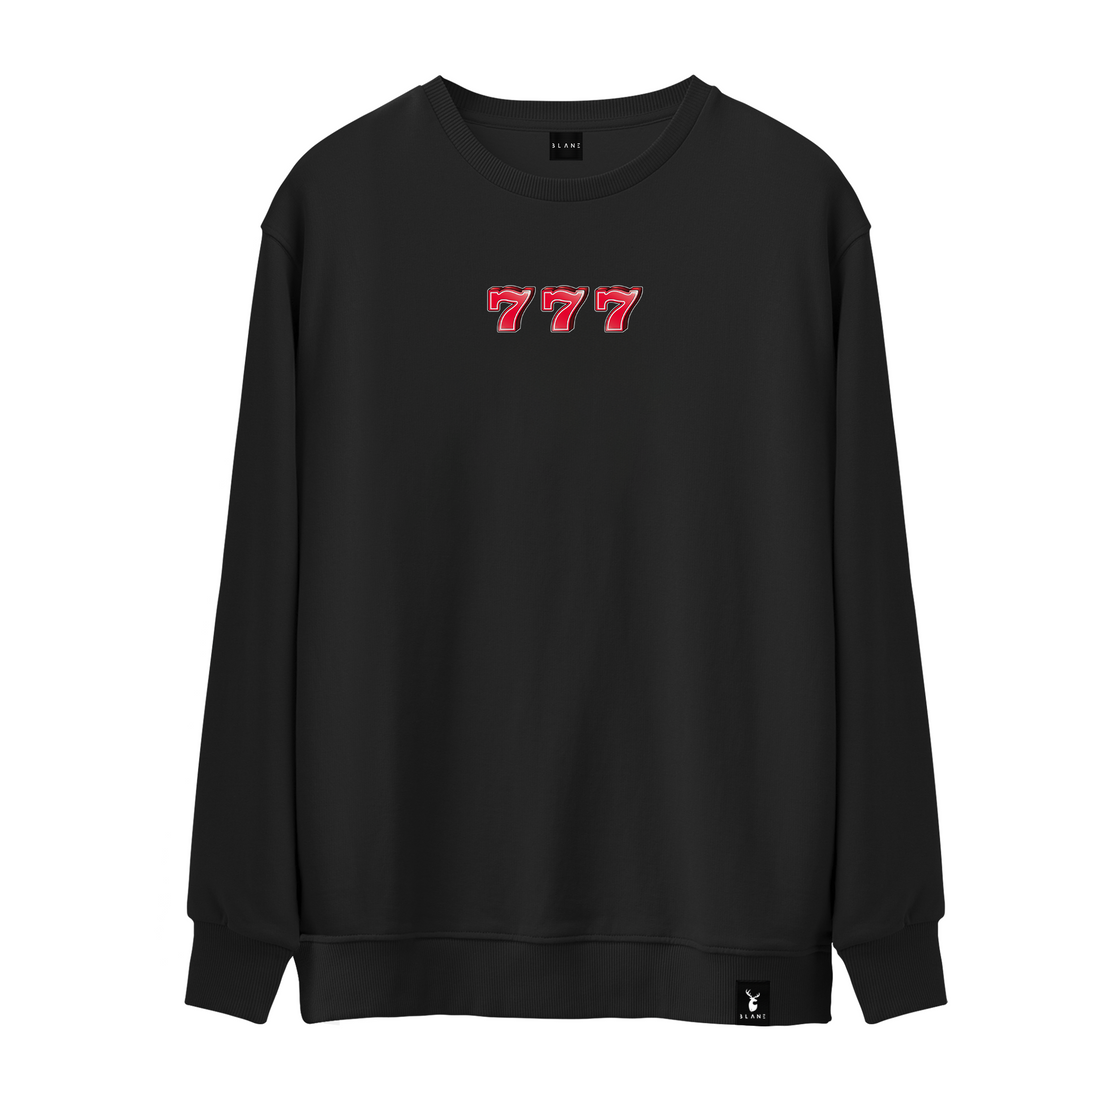 Flaming 777 - Sweatshirt